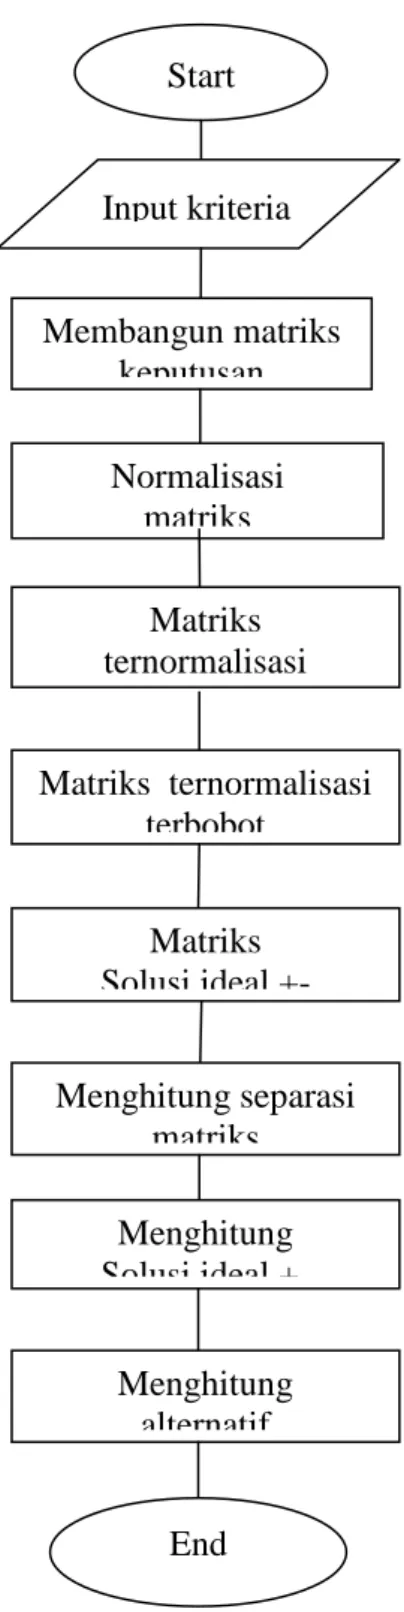 Gambar 3.5.1.Flowchart metode Topsis Start Input kriteria Membangun matriks keputusan Normalisasi matriks Matriks ternormalisasi Matriks  ternormalisasi terbobot Matriks Solusi ideal +- Menghitung separasi matriks Menghitung Solusi ideal +- Menghitung alte